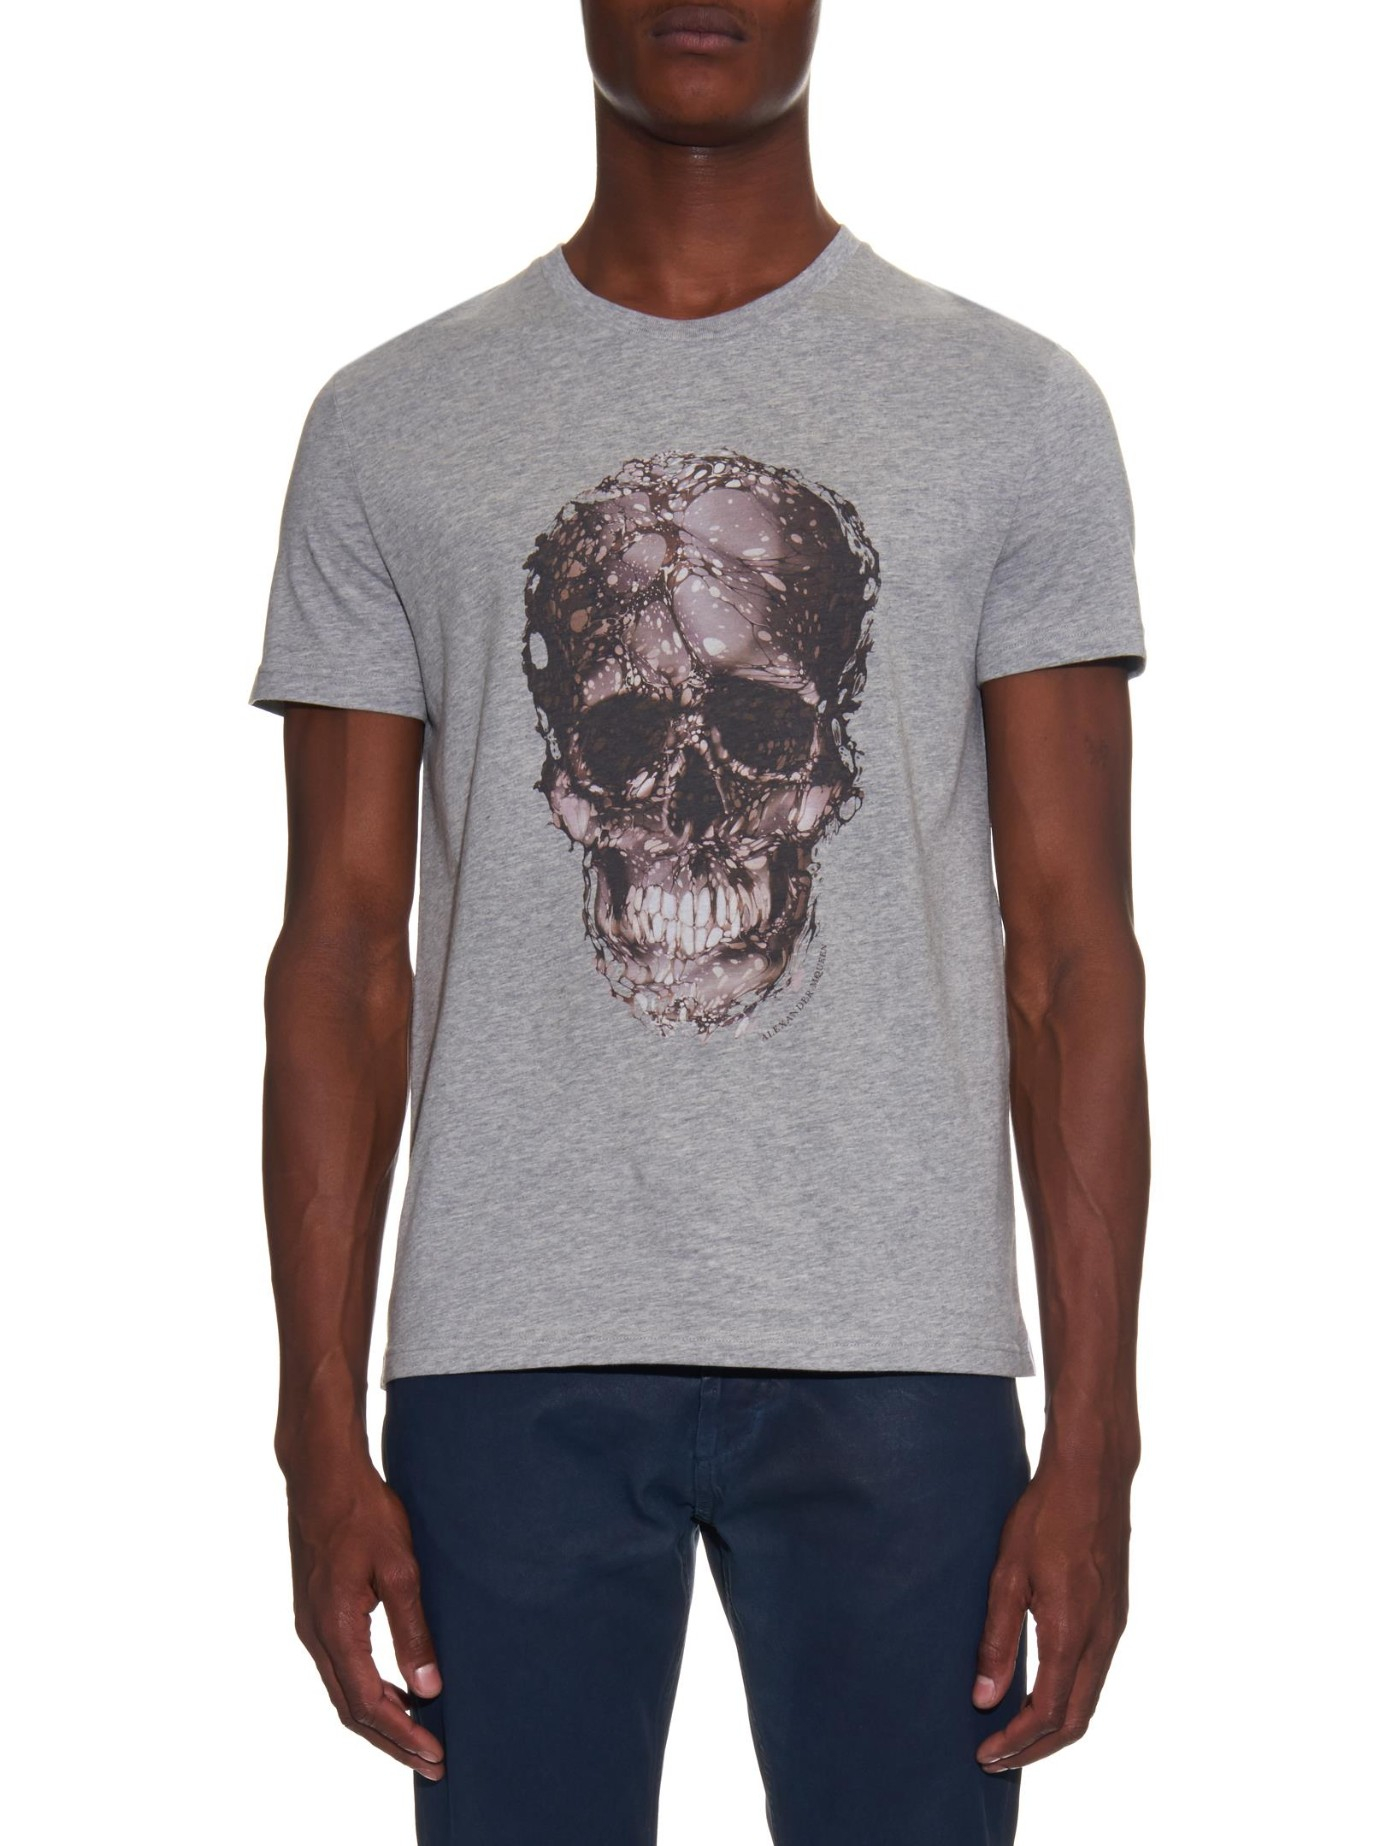 Lyst - Alexander McQueen Victorian Skull T-Shirt in Gray for Men